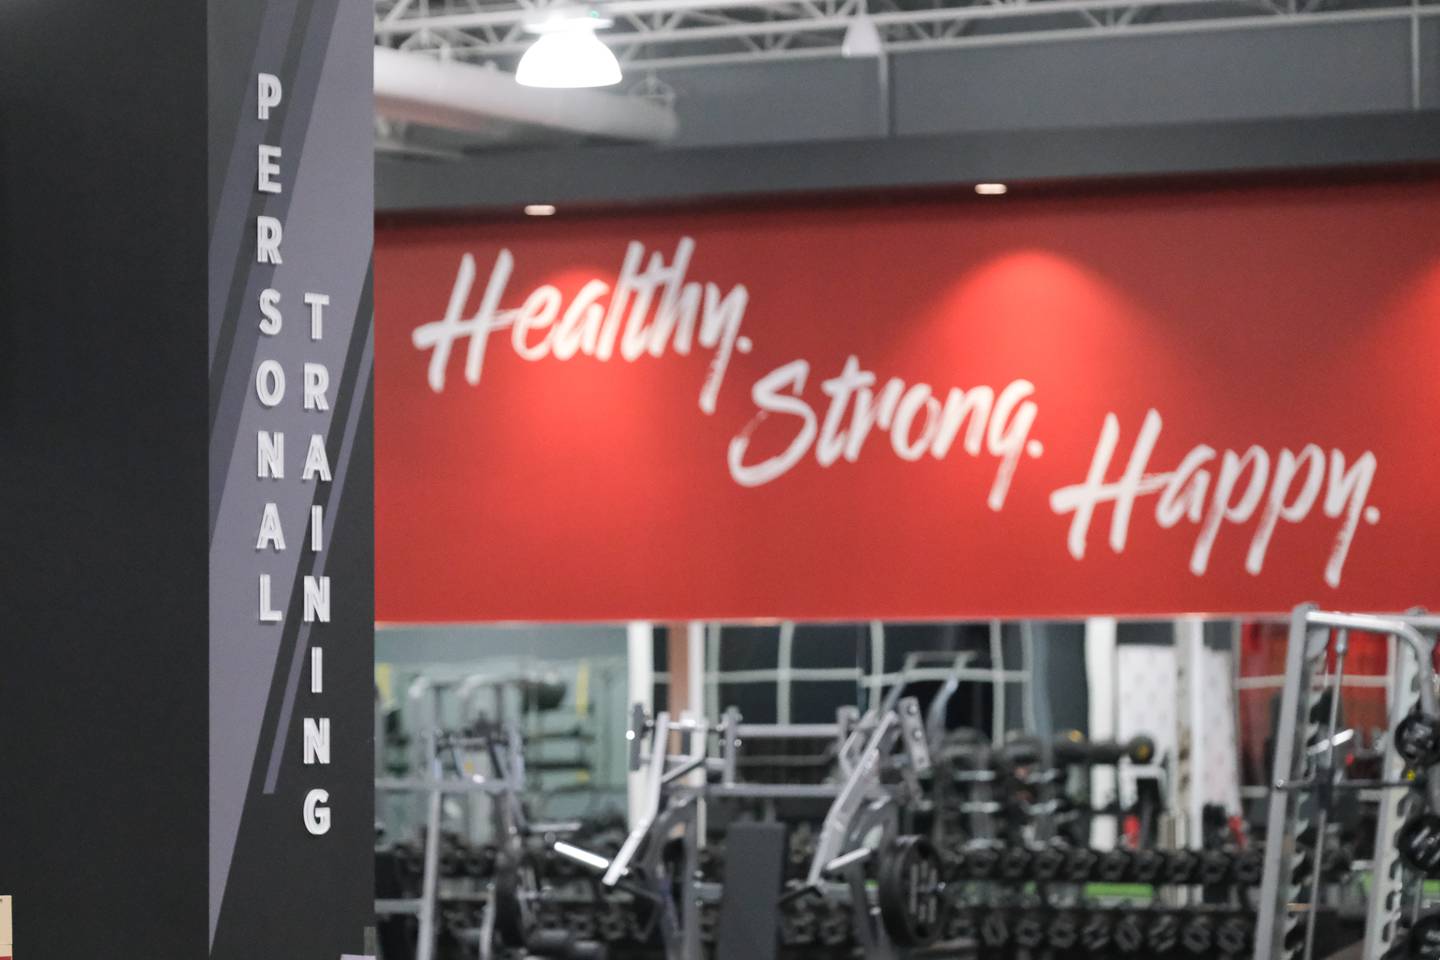 VASA Fitness opened a new location in the North Ridge Plaza in Joliet. Friday, Feb. 11, 2022, in Joliet.